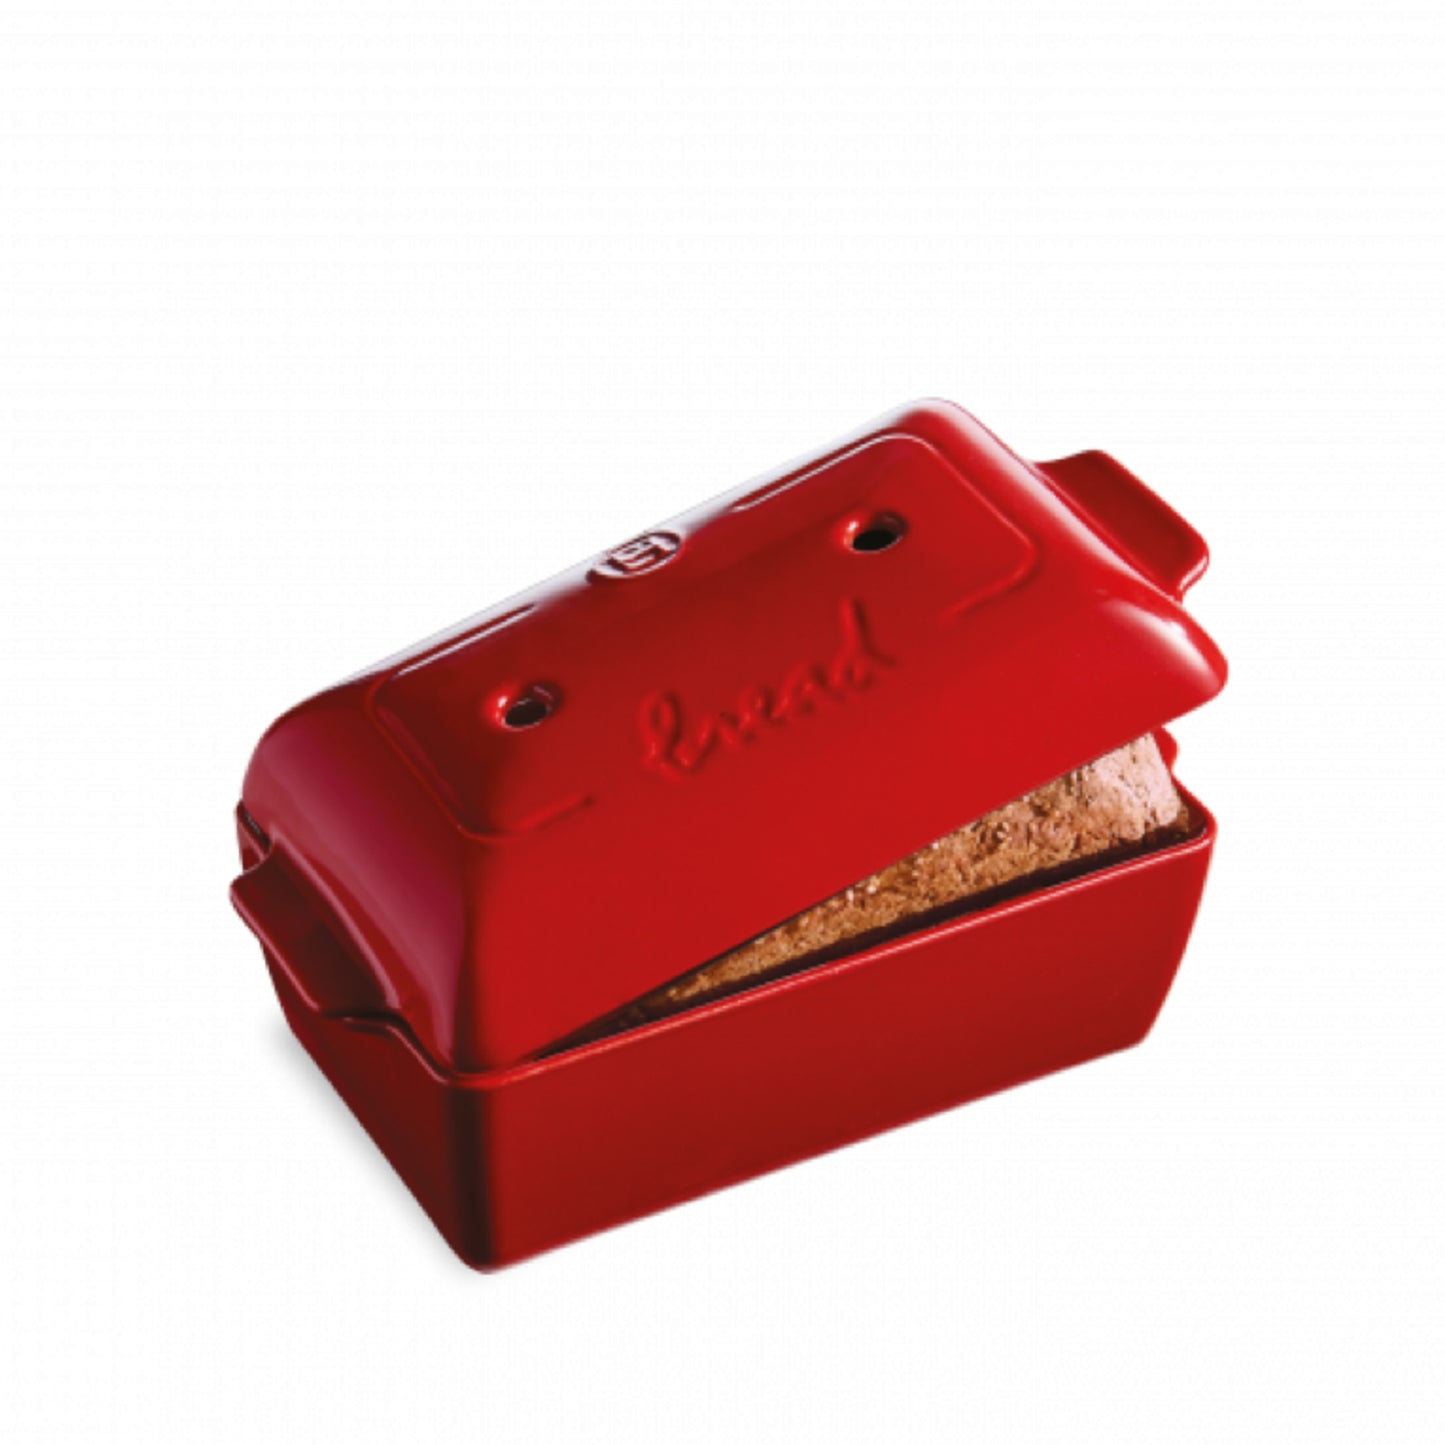 Pan cassetta rosso 34 5504 - Lista Nozze VJ